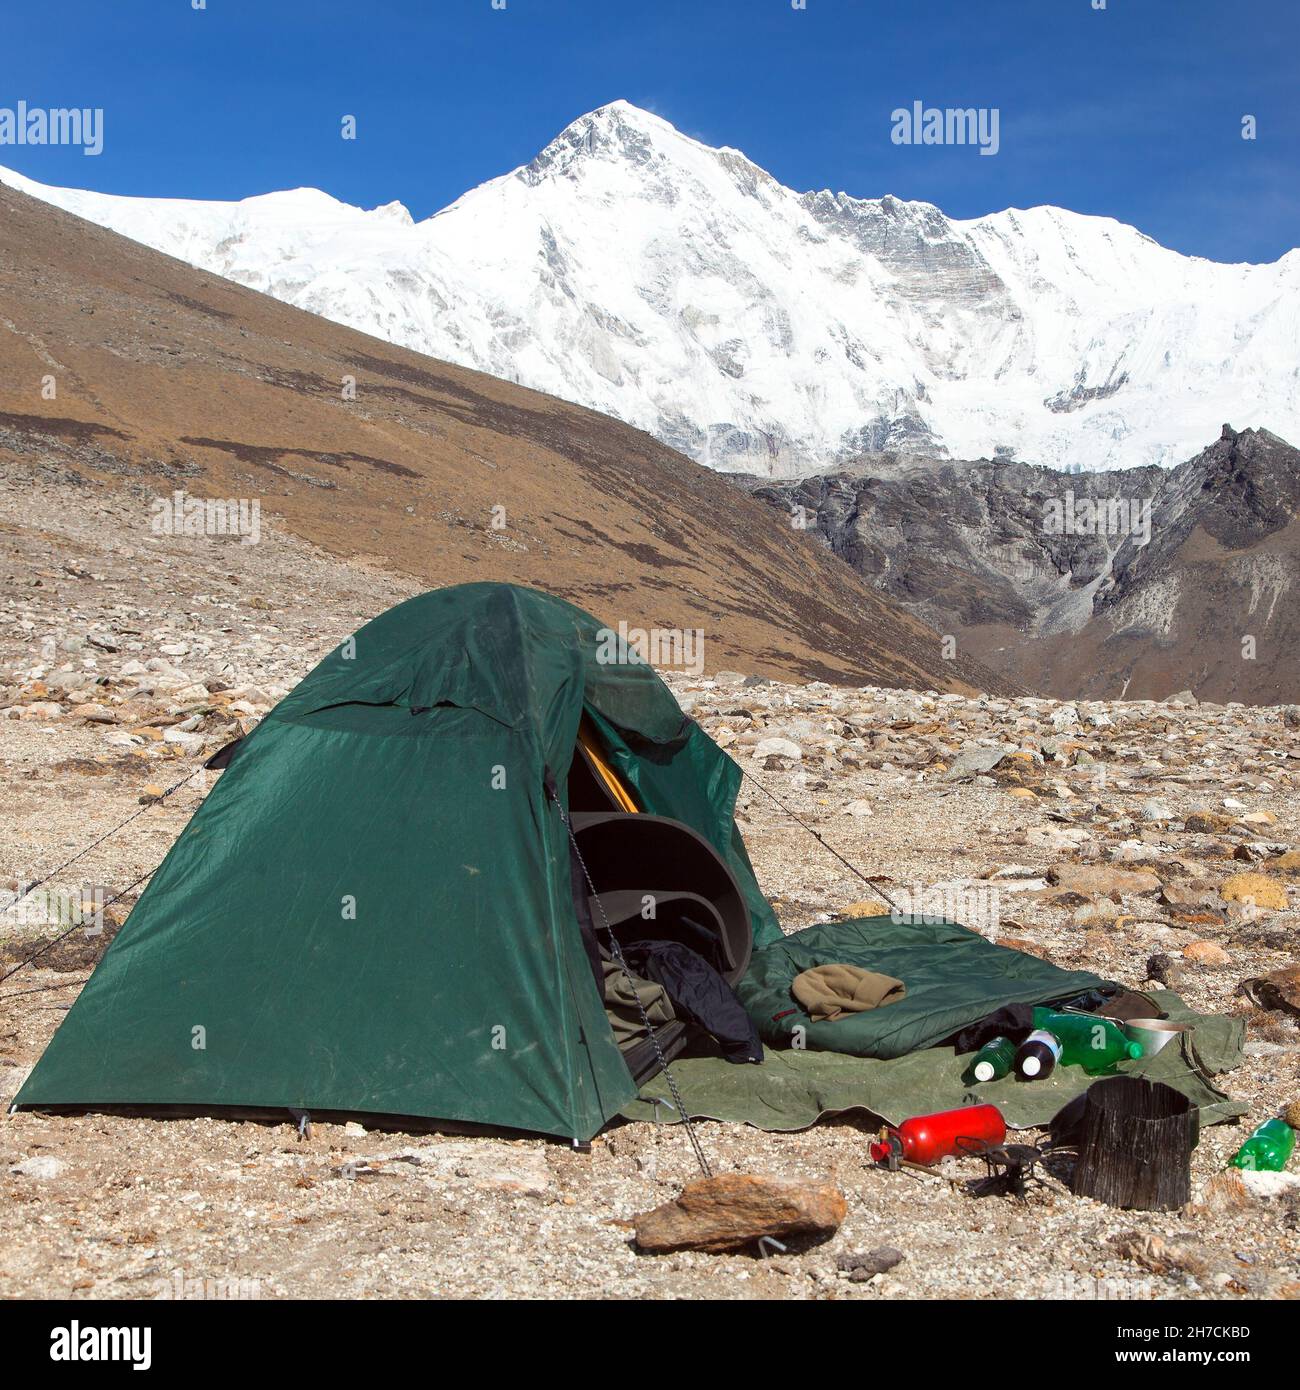 Camping unter dem Berg Cho oyu - Cho oyu Basislager - nepal himalaya Berge Stockfoto